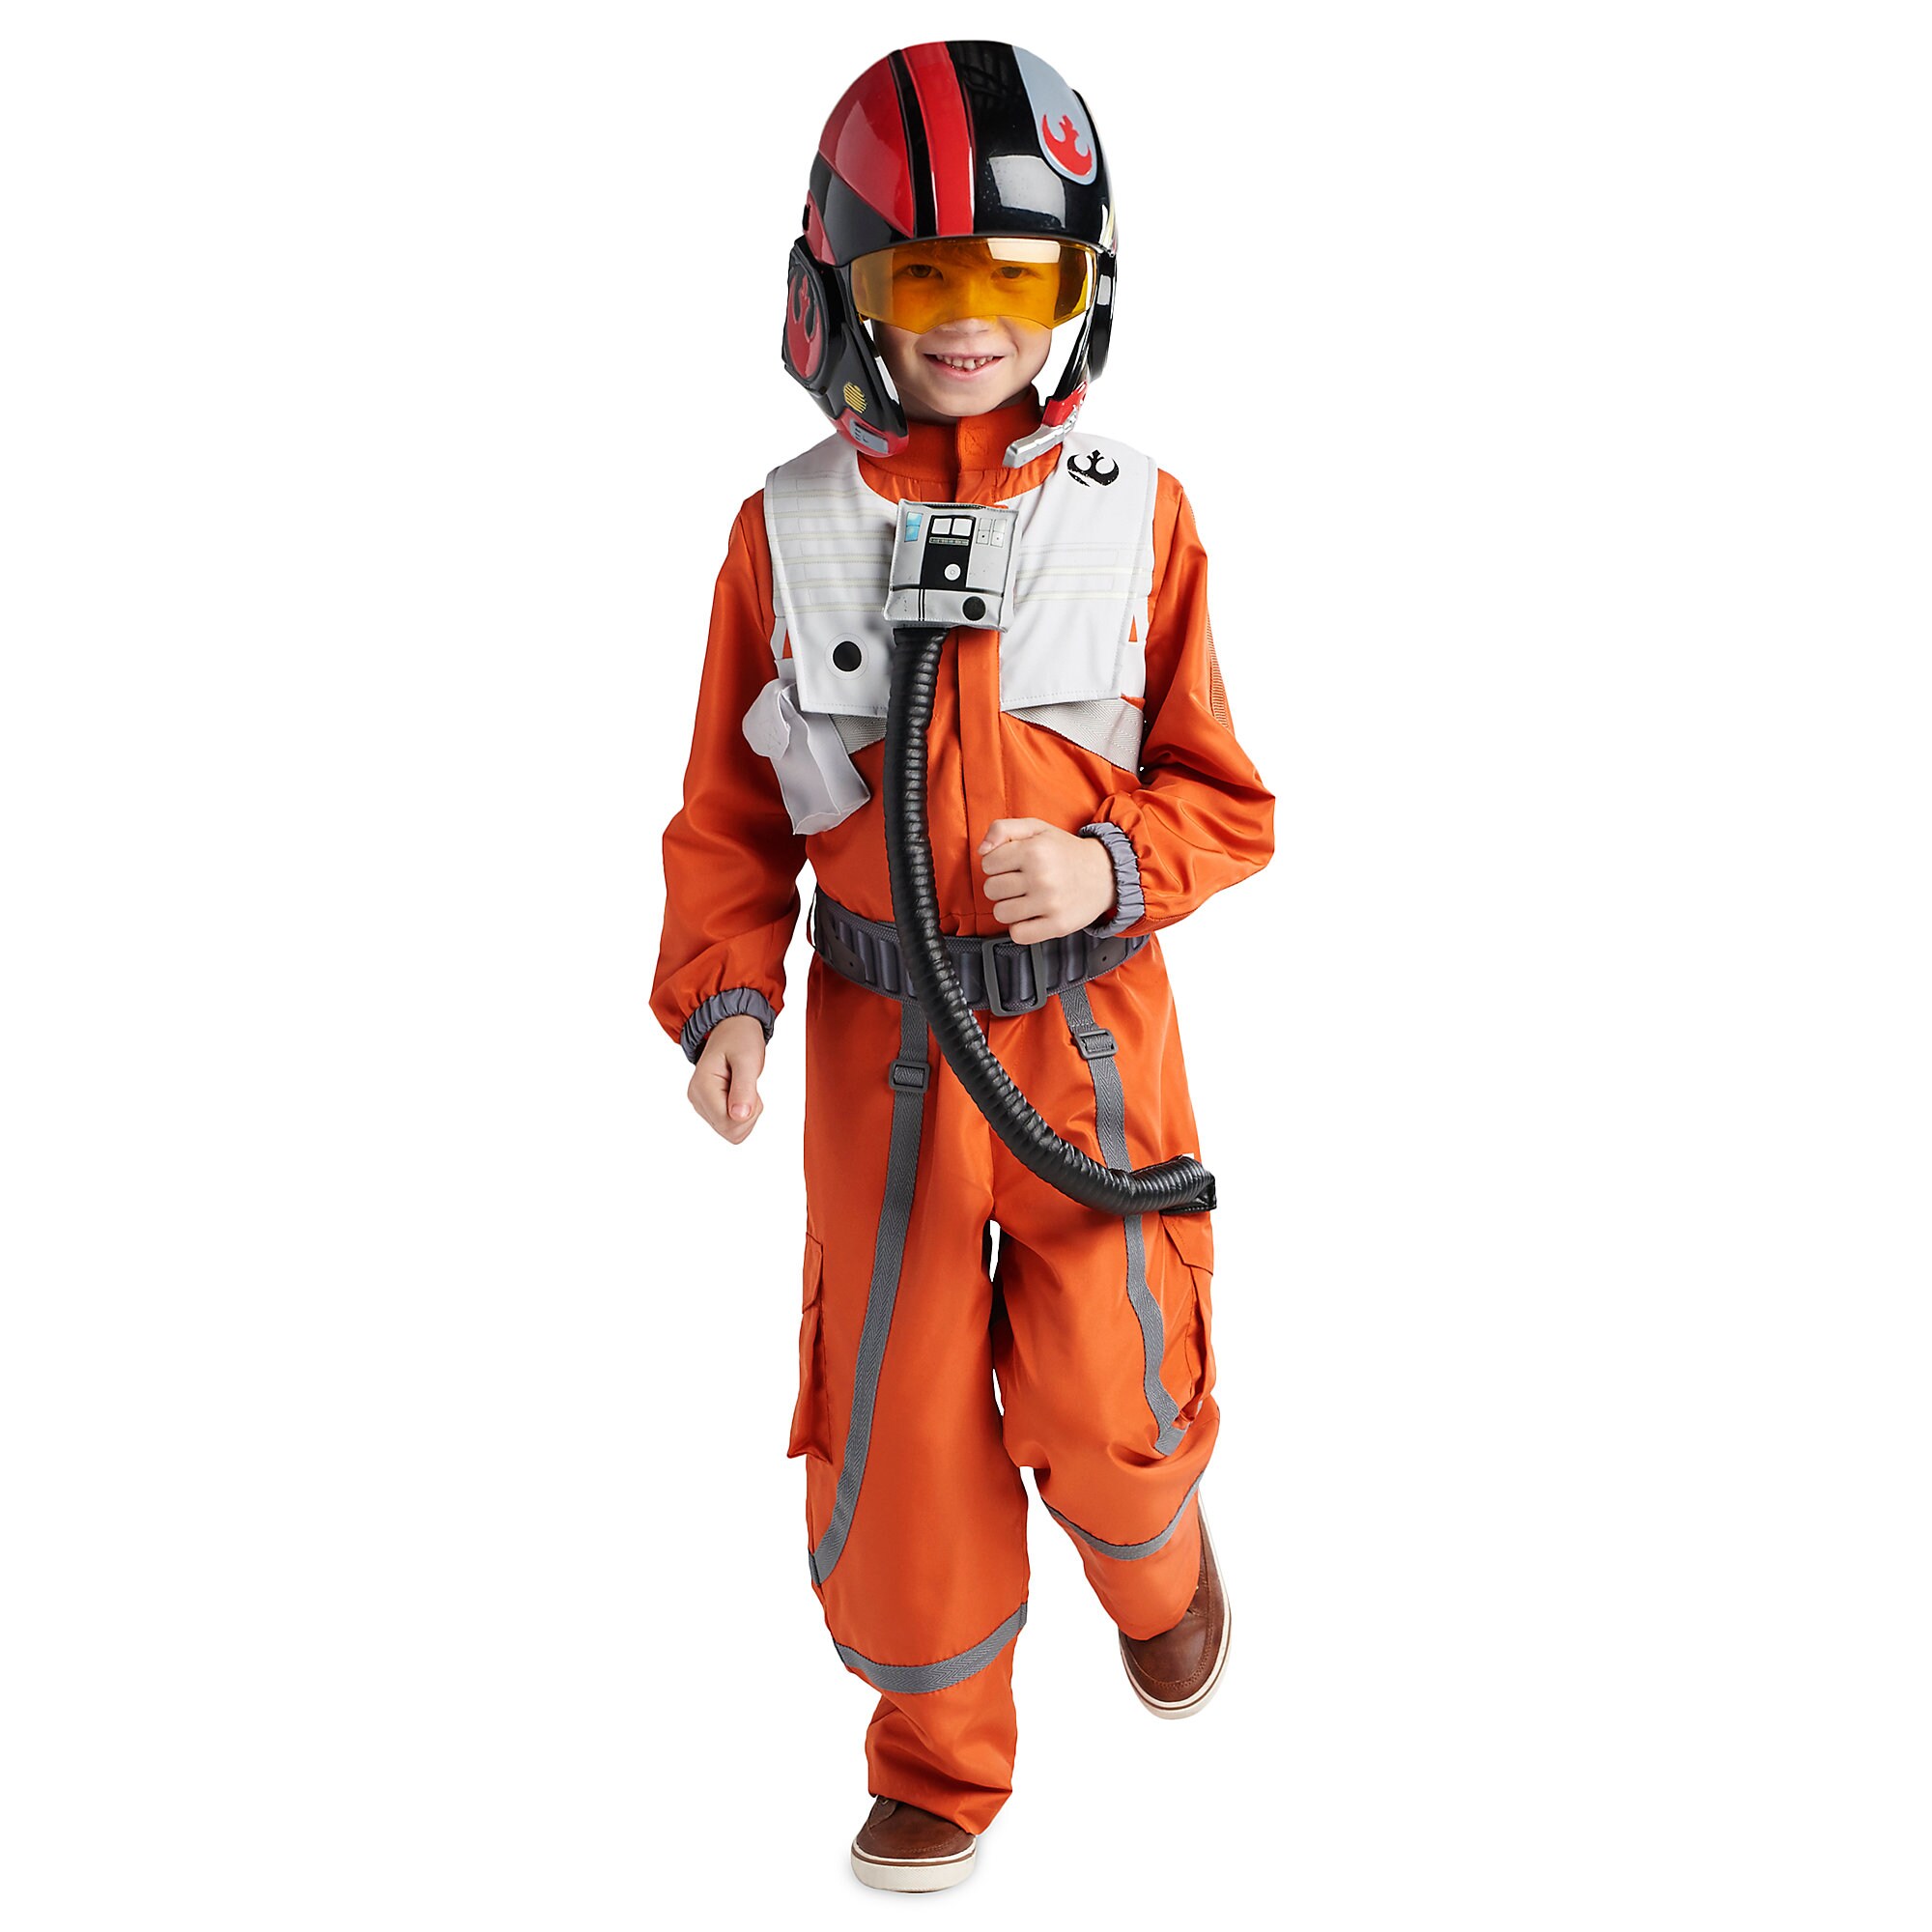 Poe Dameron Costume for Kids - Star Wars